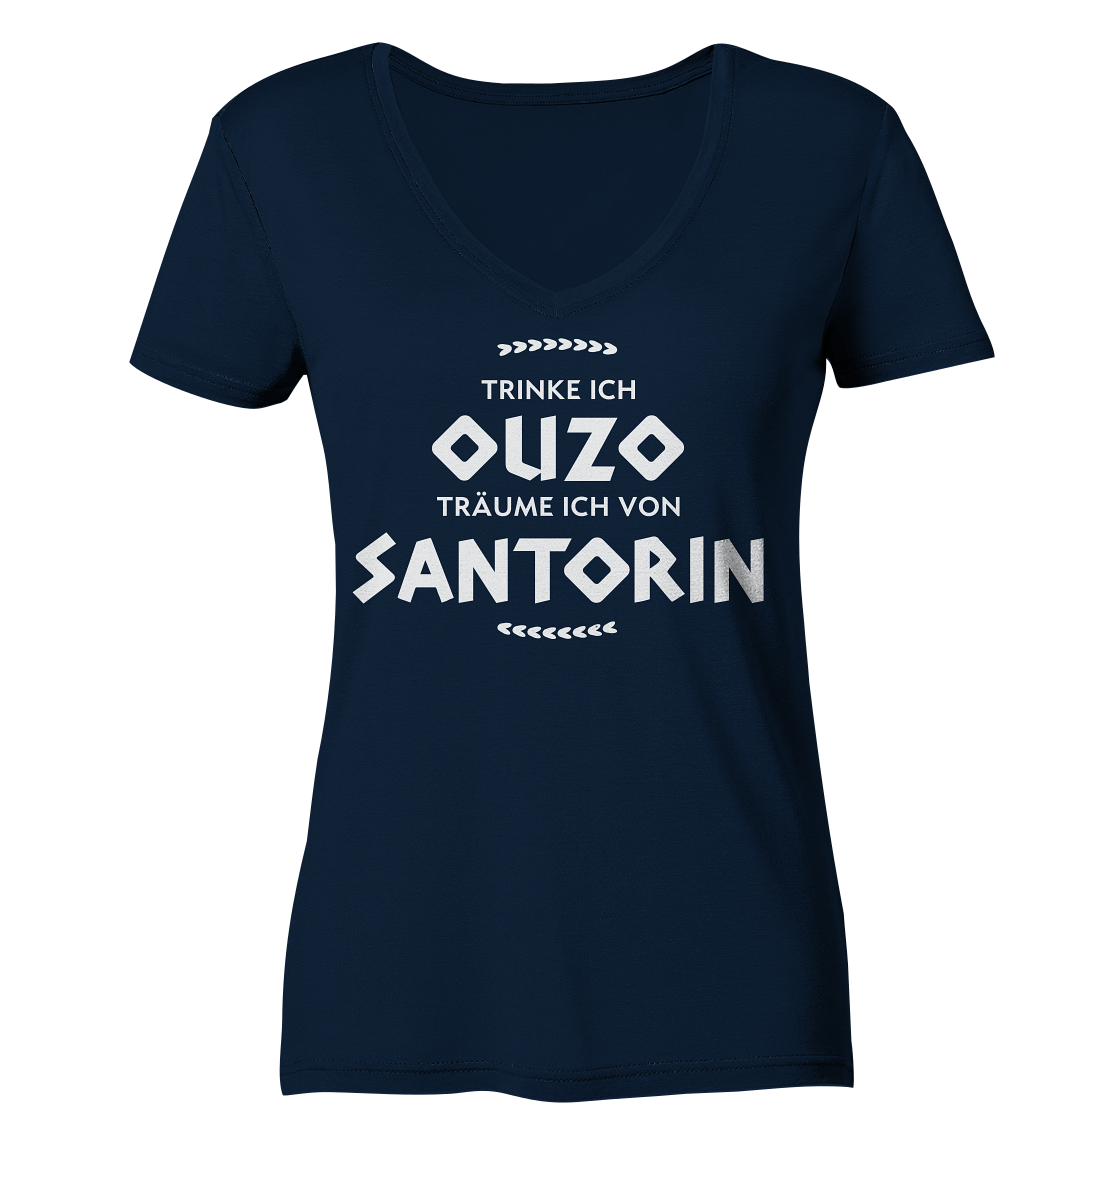 If I drink ouzo I dream of Santorini - Ladies Organic V-Neck Shirt